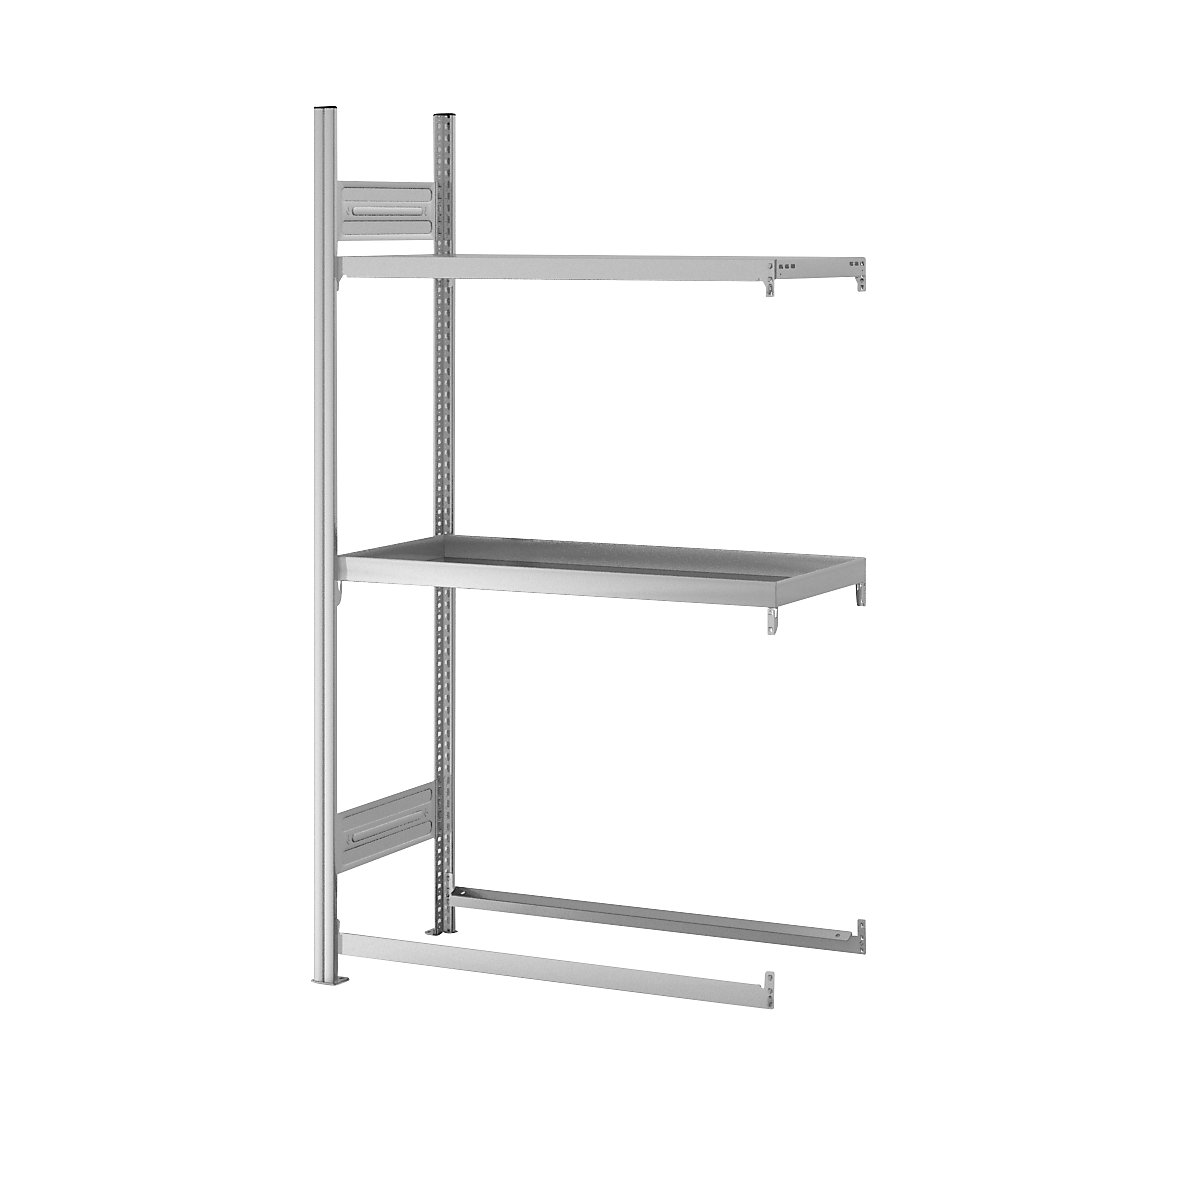 Warehouse and workshop multifunction shelf unit – hofe, height 1750 mm, 3 storage levels, extension shelf unit, WxD 1010 x 435 mm